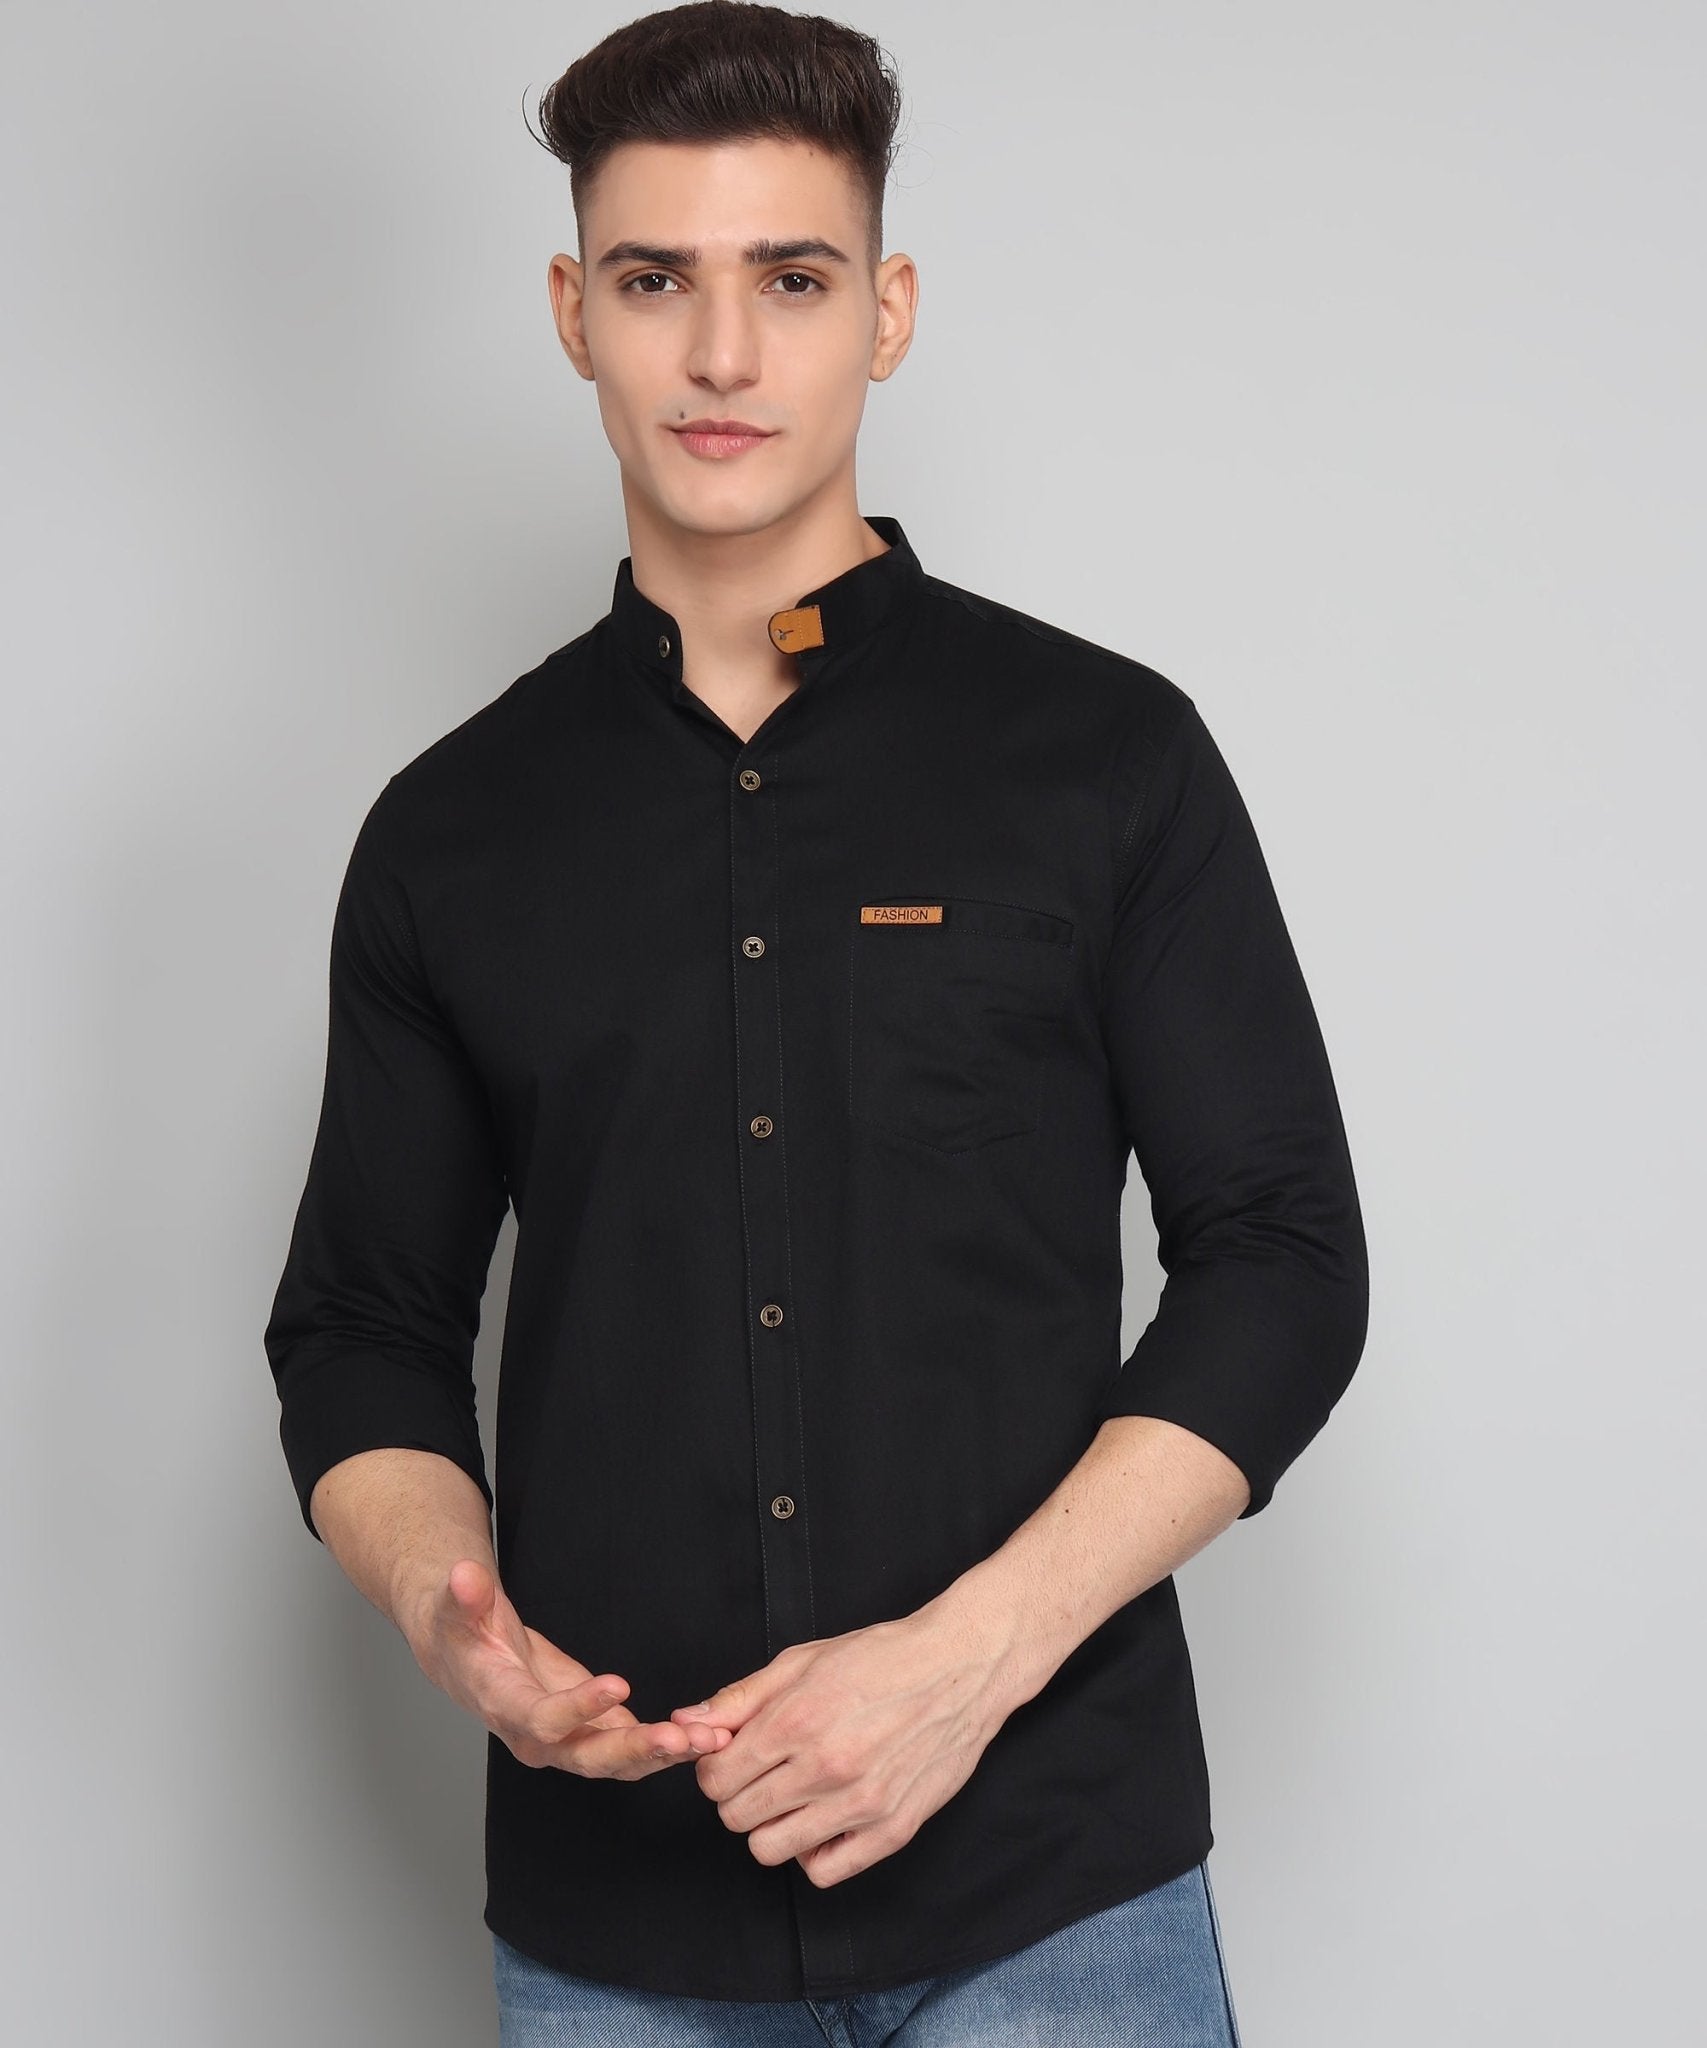 TryBuy Premium Classy Ravishing Black Casual Cotton Solid Men's Shirt - TryBuy® USA🇺🇸